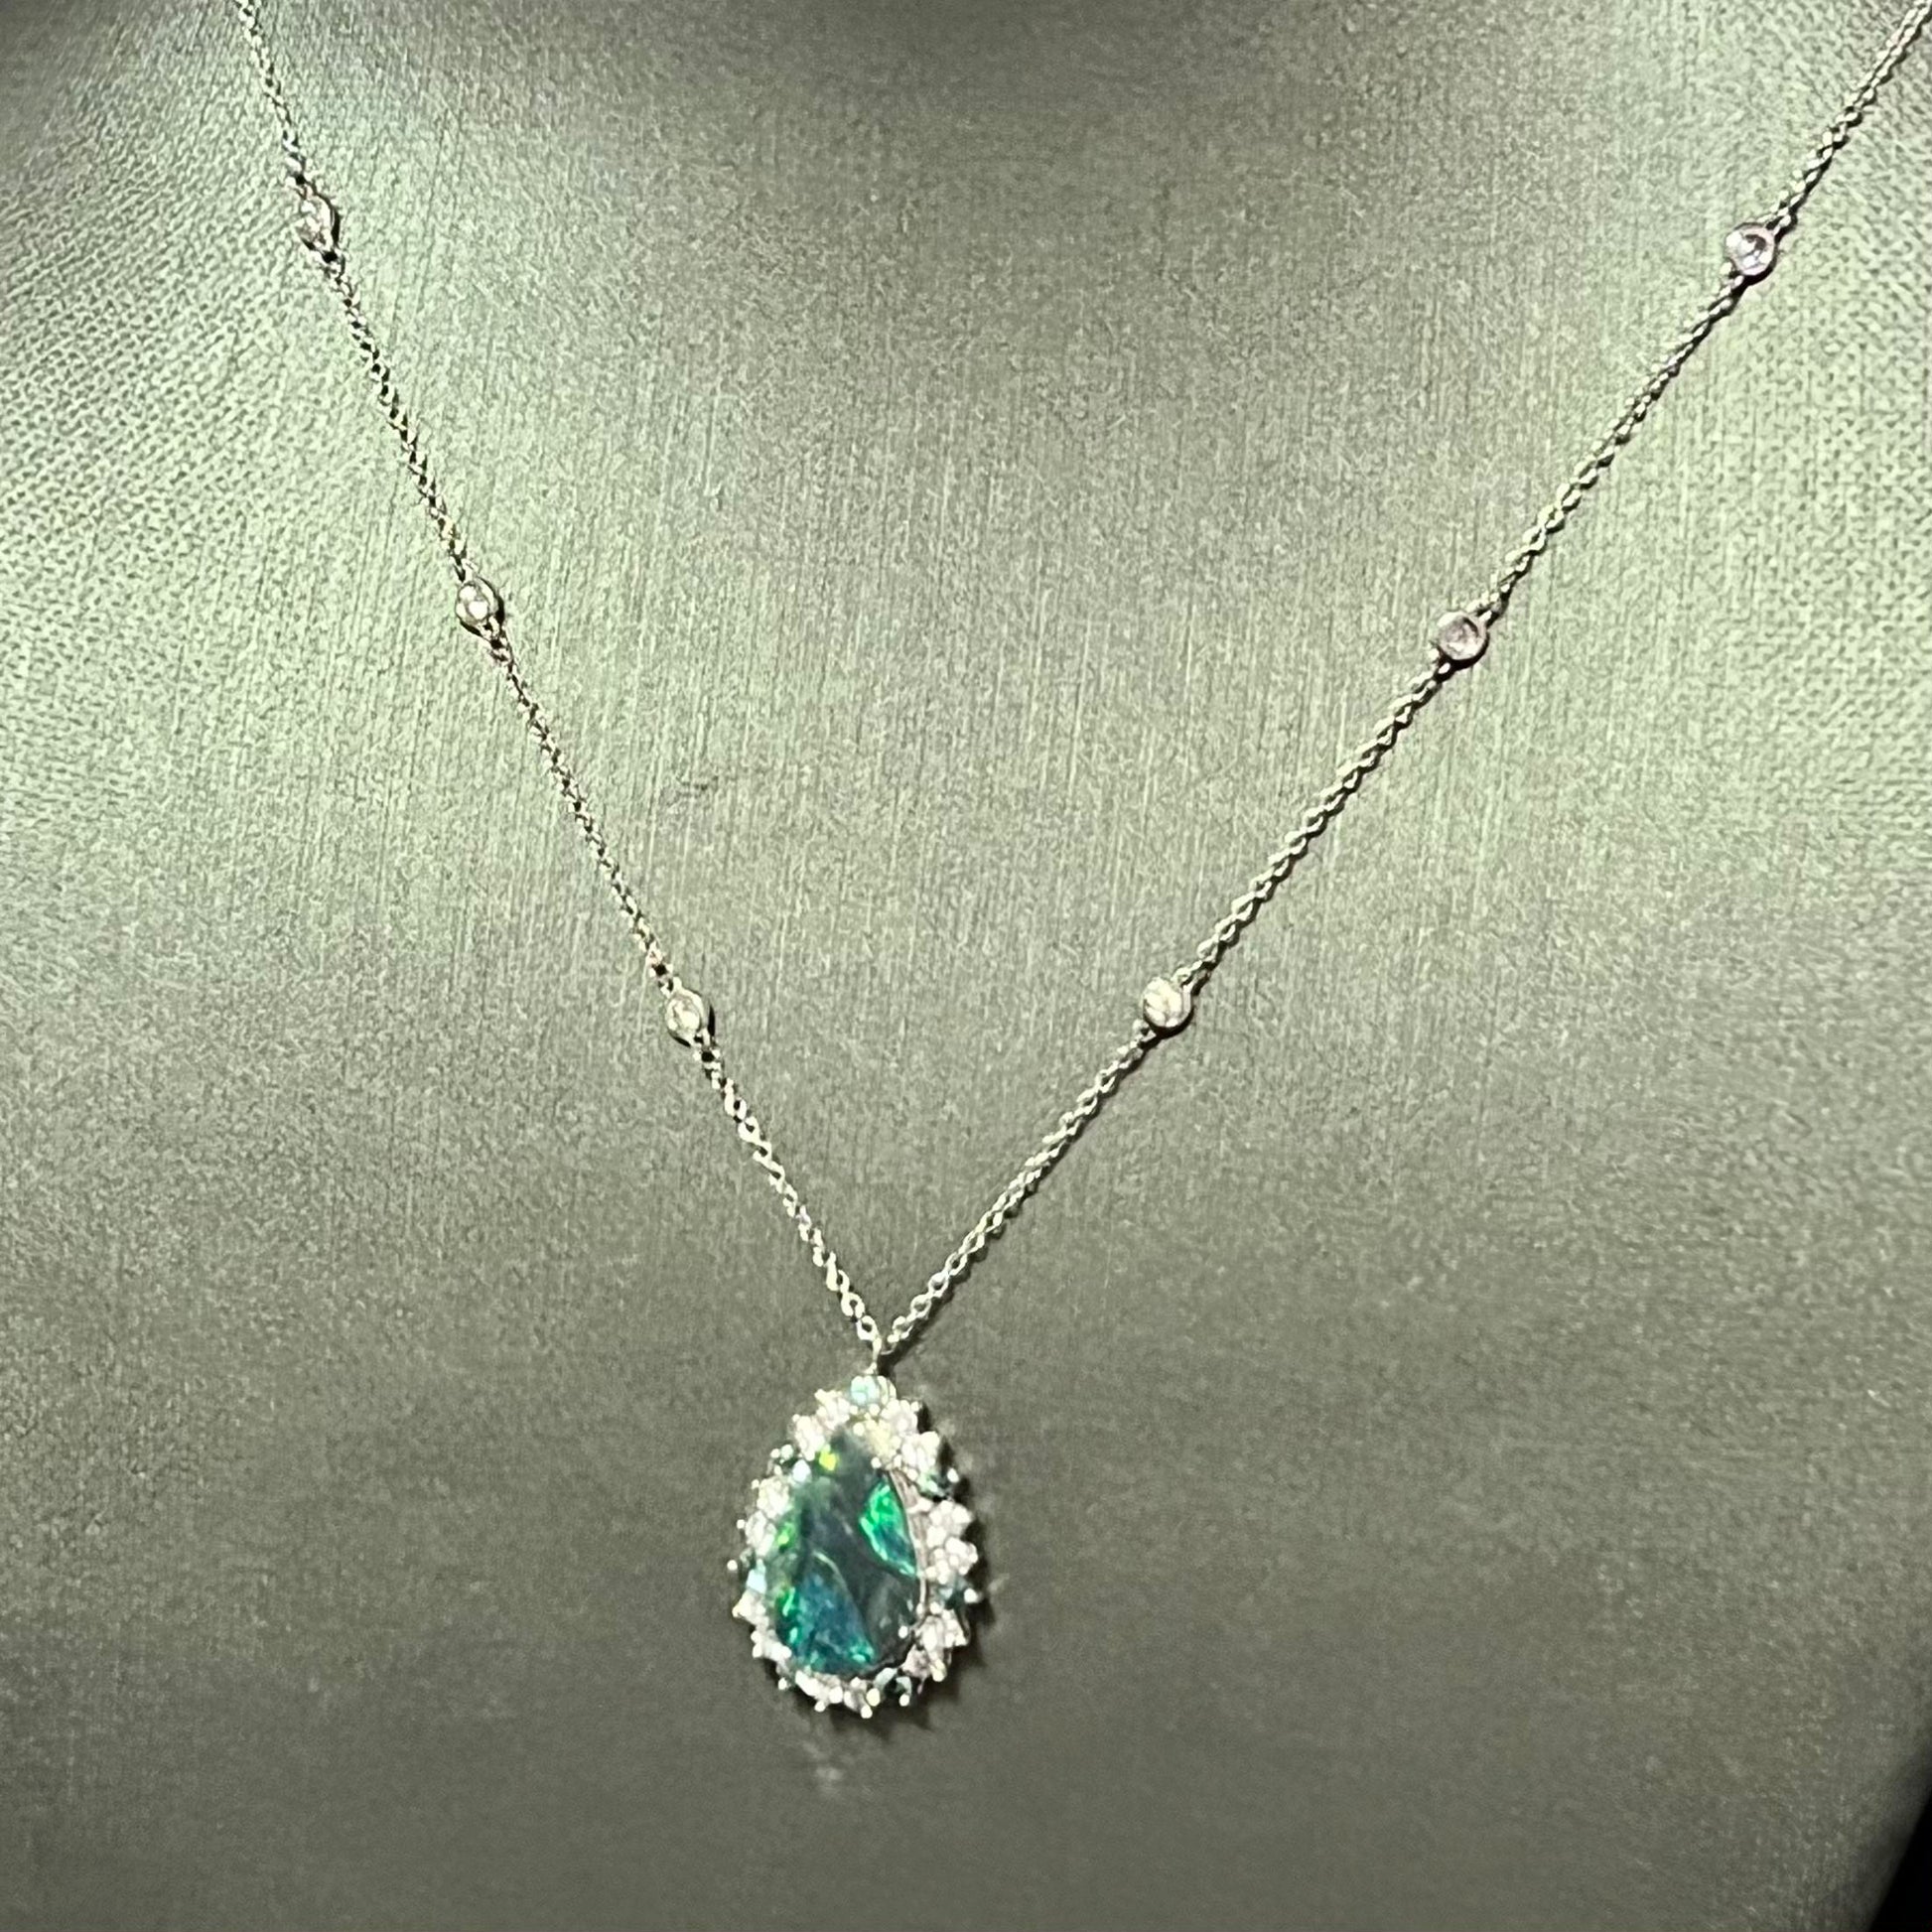 Natural Opal Diamond Pendant w/ 18" Gold Chain 3.25 TCW GIA Certified $8,950 211197 - Certified Fine Jewelry